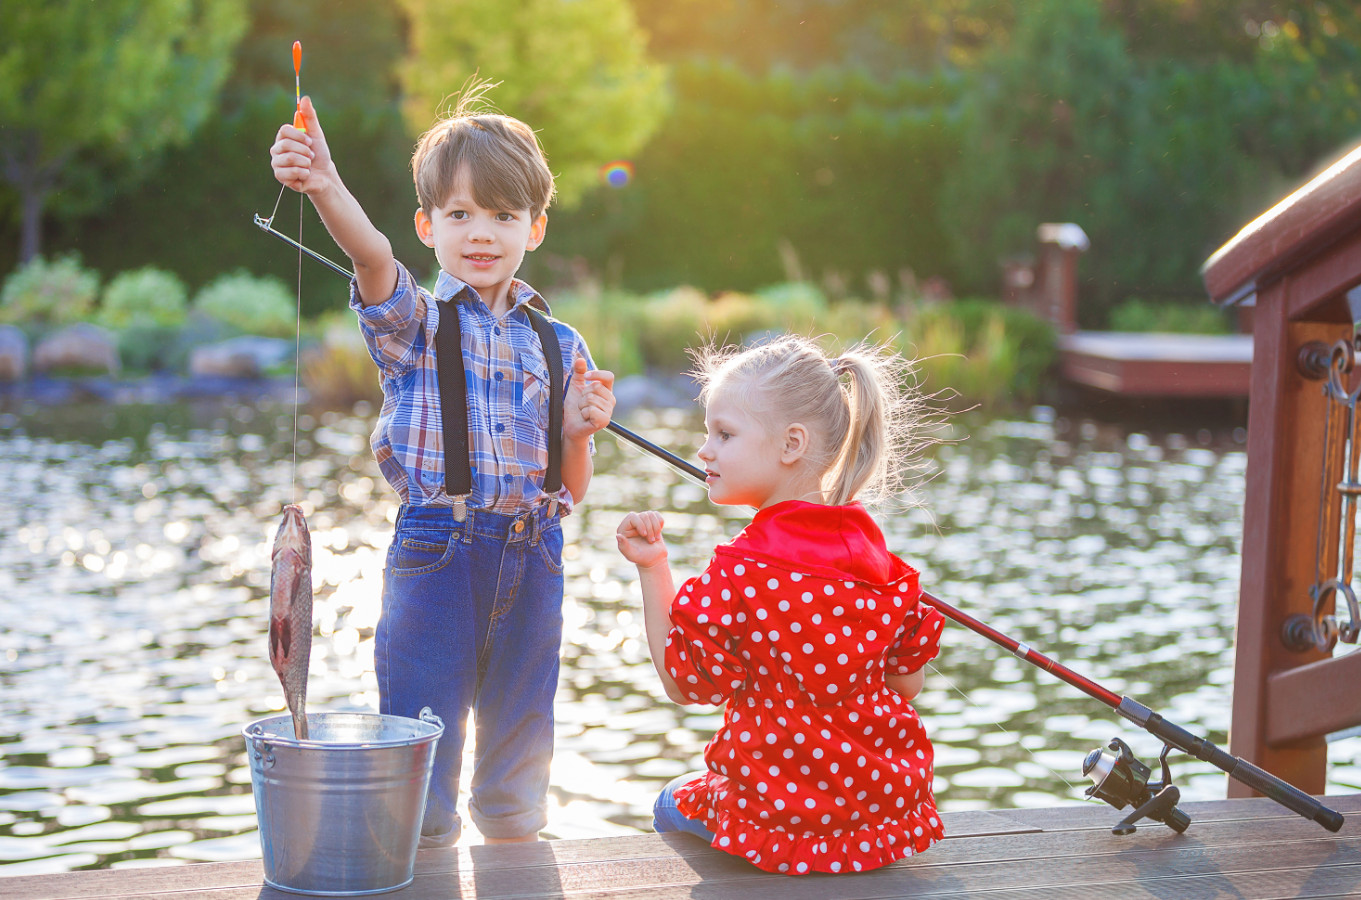 Kids Fishing Pole and Tackle Box Combo - Fun and Easy Fishing Kit